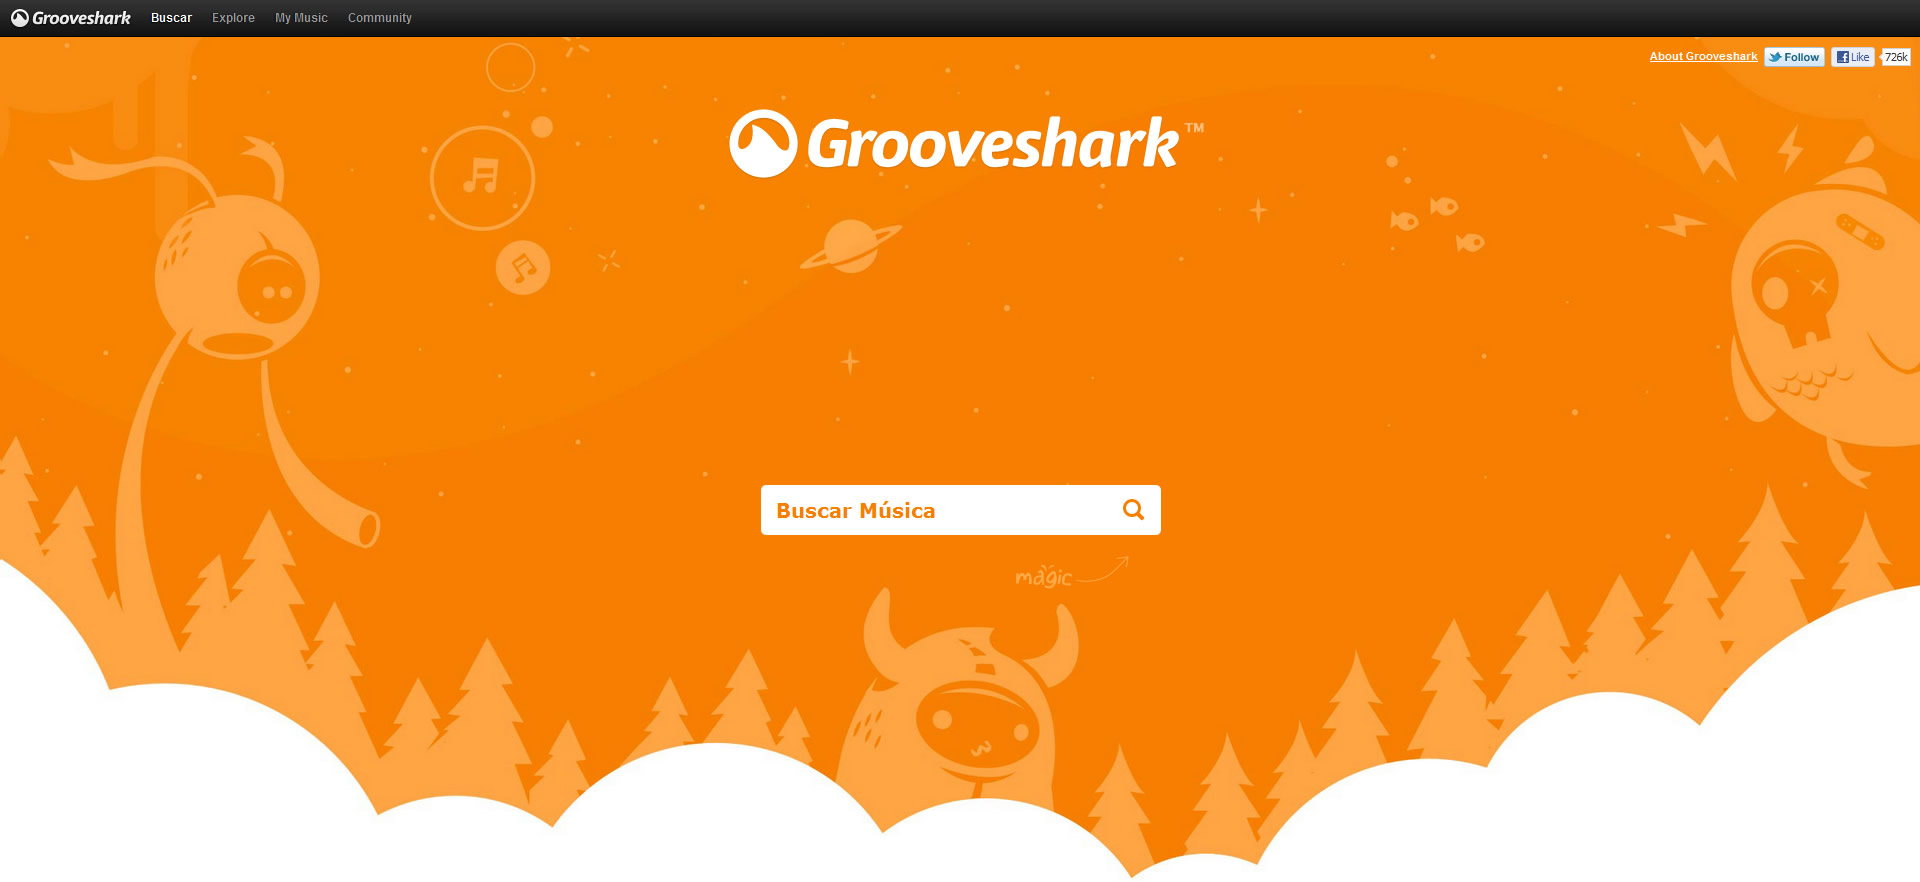 La Interfaz de Grooveshark ya era de excelencia allá por 2011.